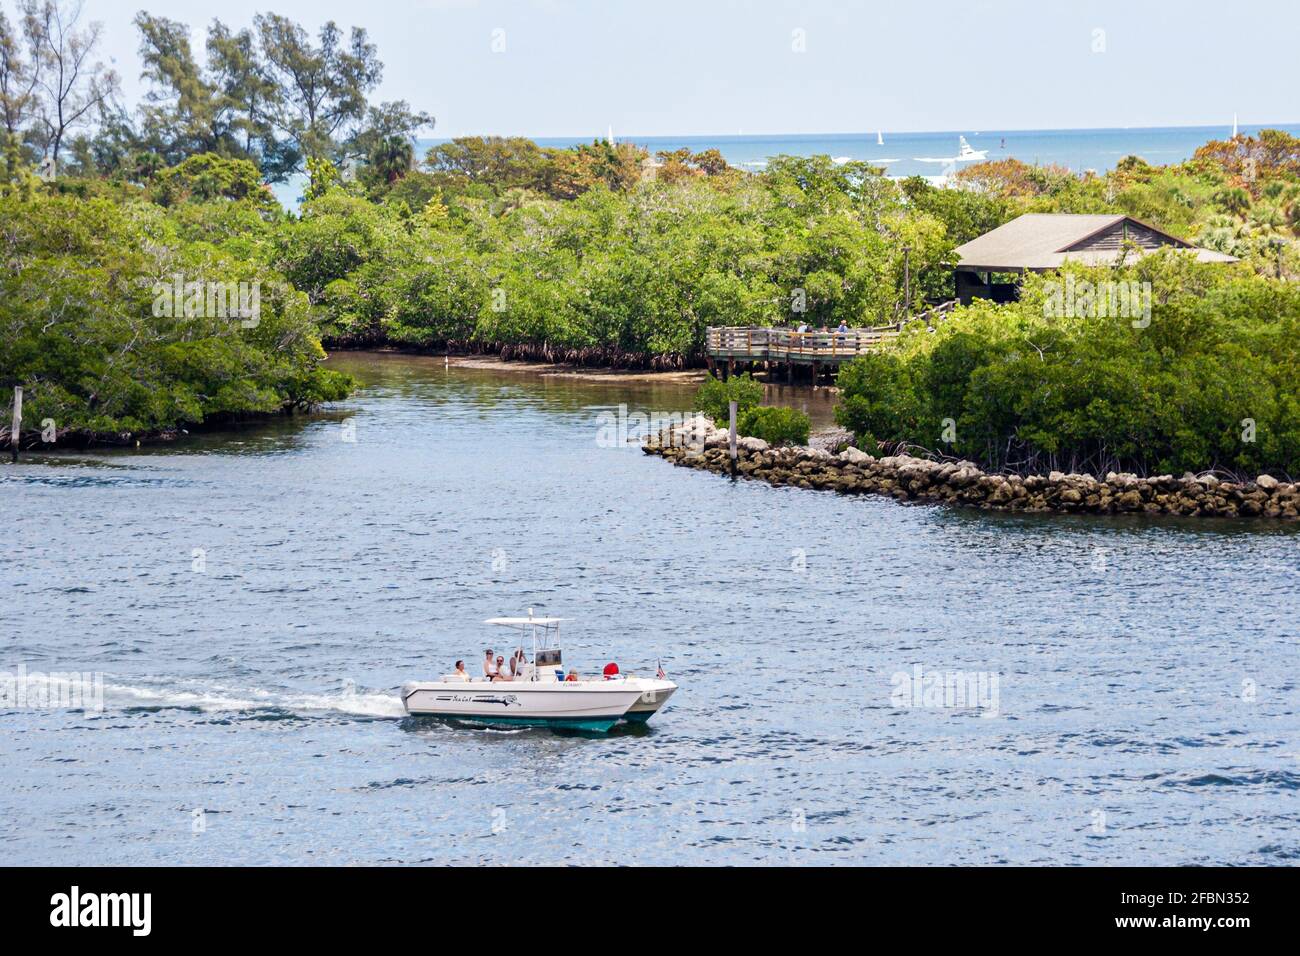 Florida Ft. Fort Lauderdale Port Everglades,former John U. Lloyd State Park,Dr. Von D. Mizell-Eula Johnson State Park,Stranahan River boat, Stock Photo